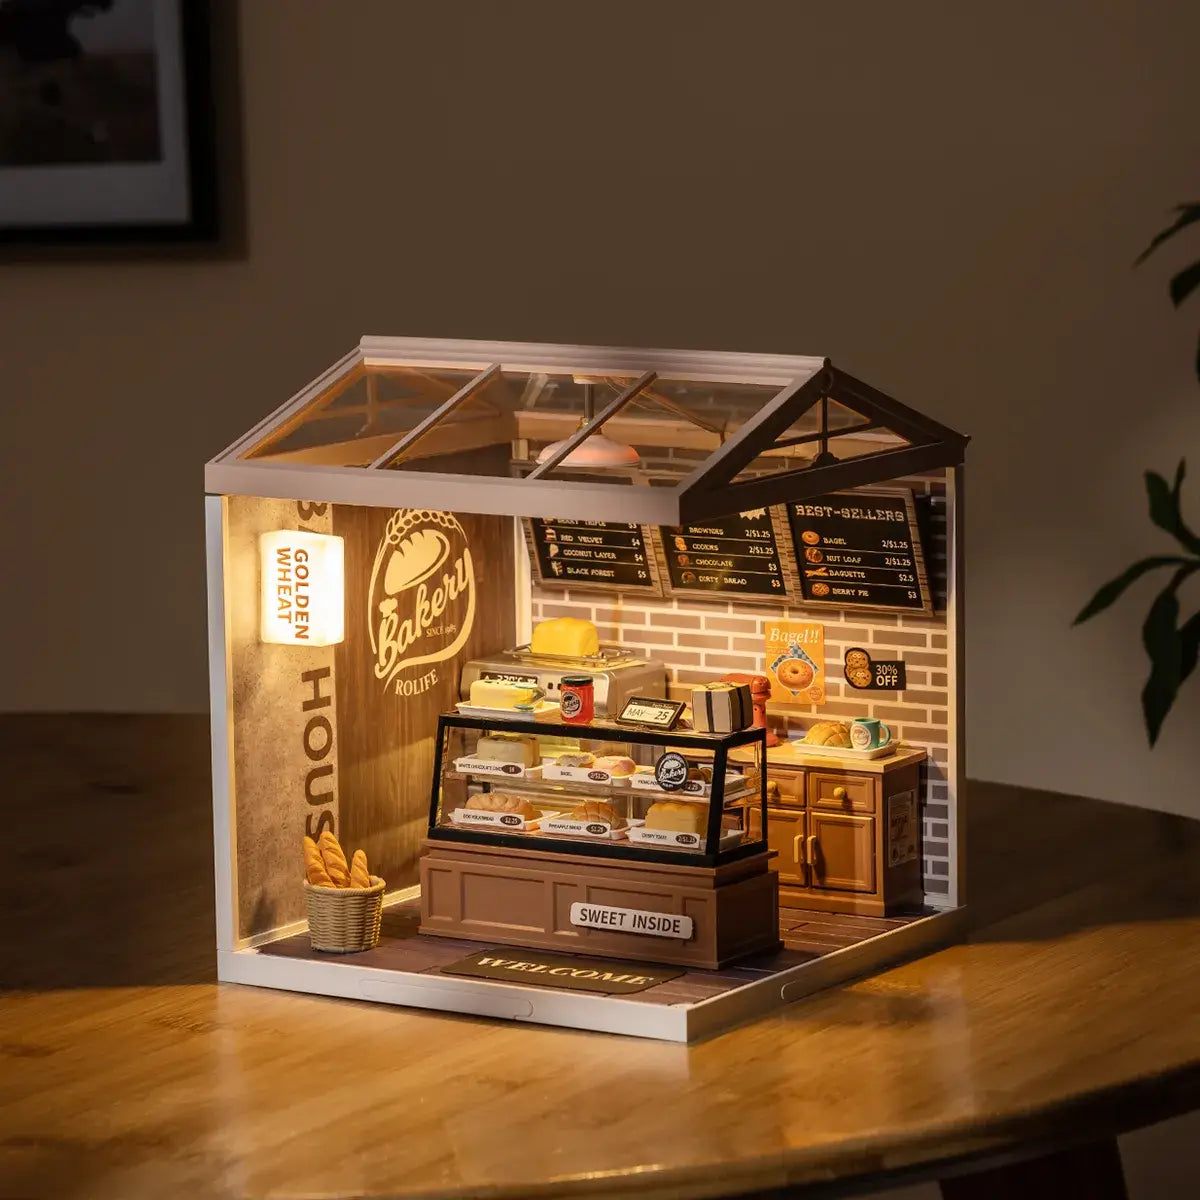 DIY Miniature Model Kit: Golden Wheat Bakery